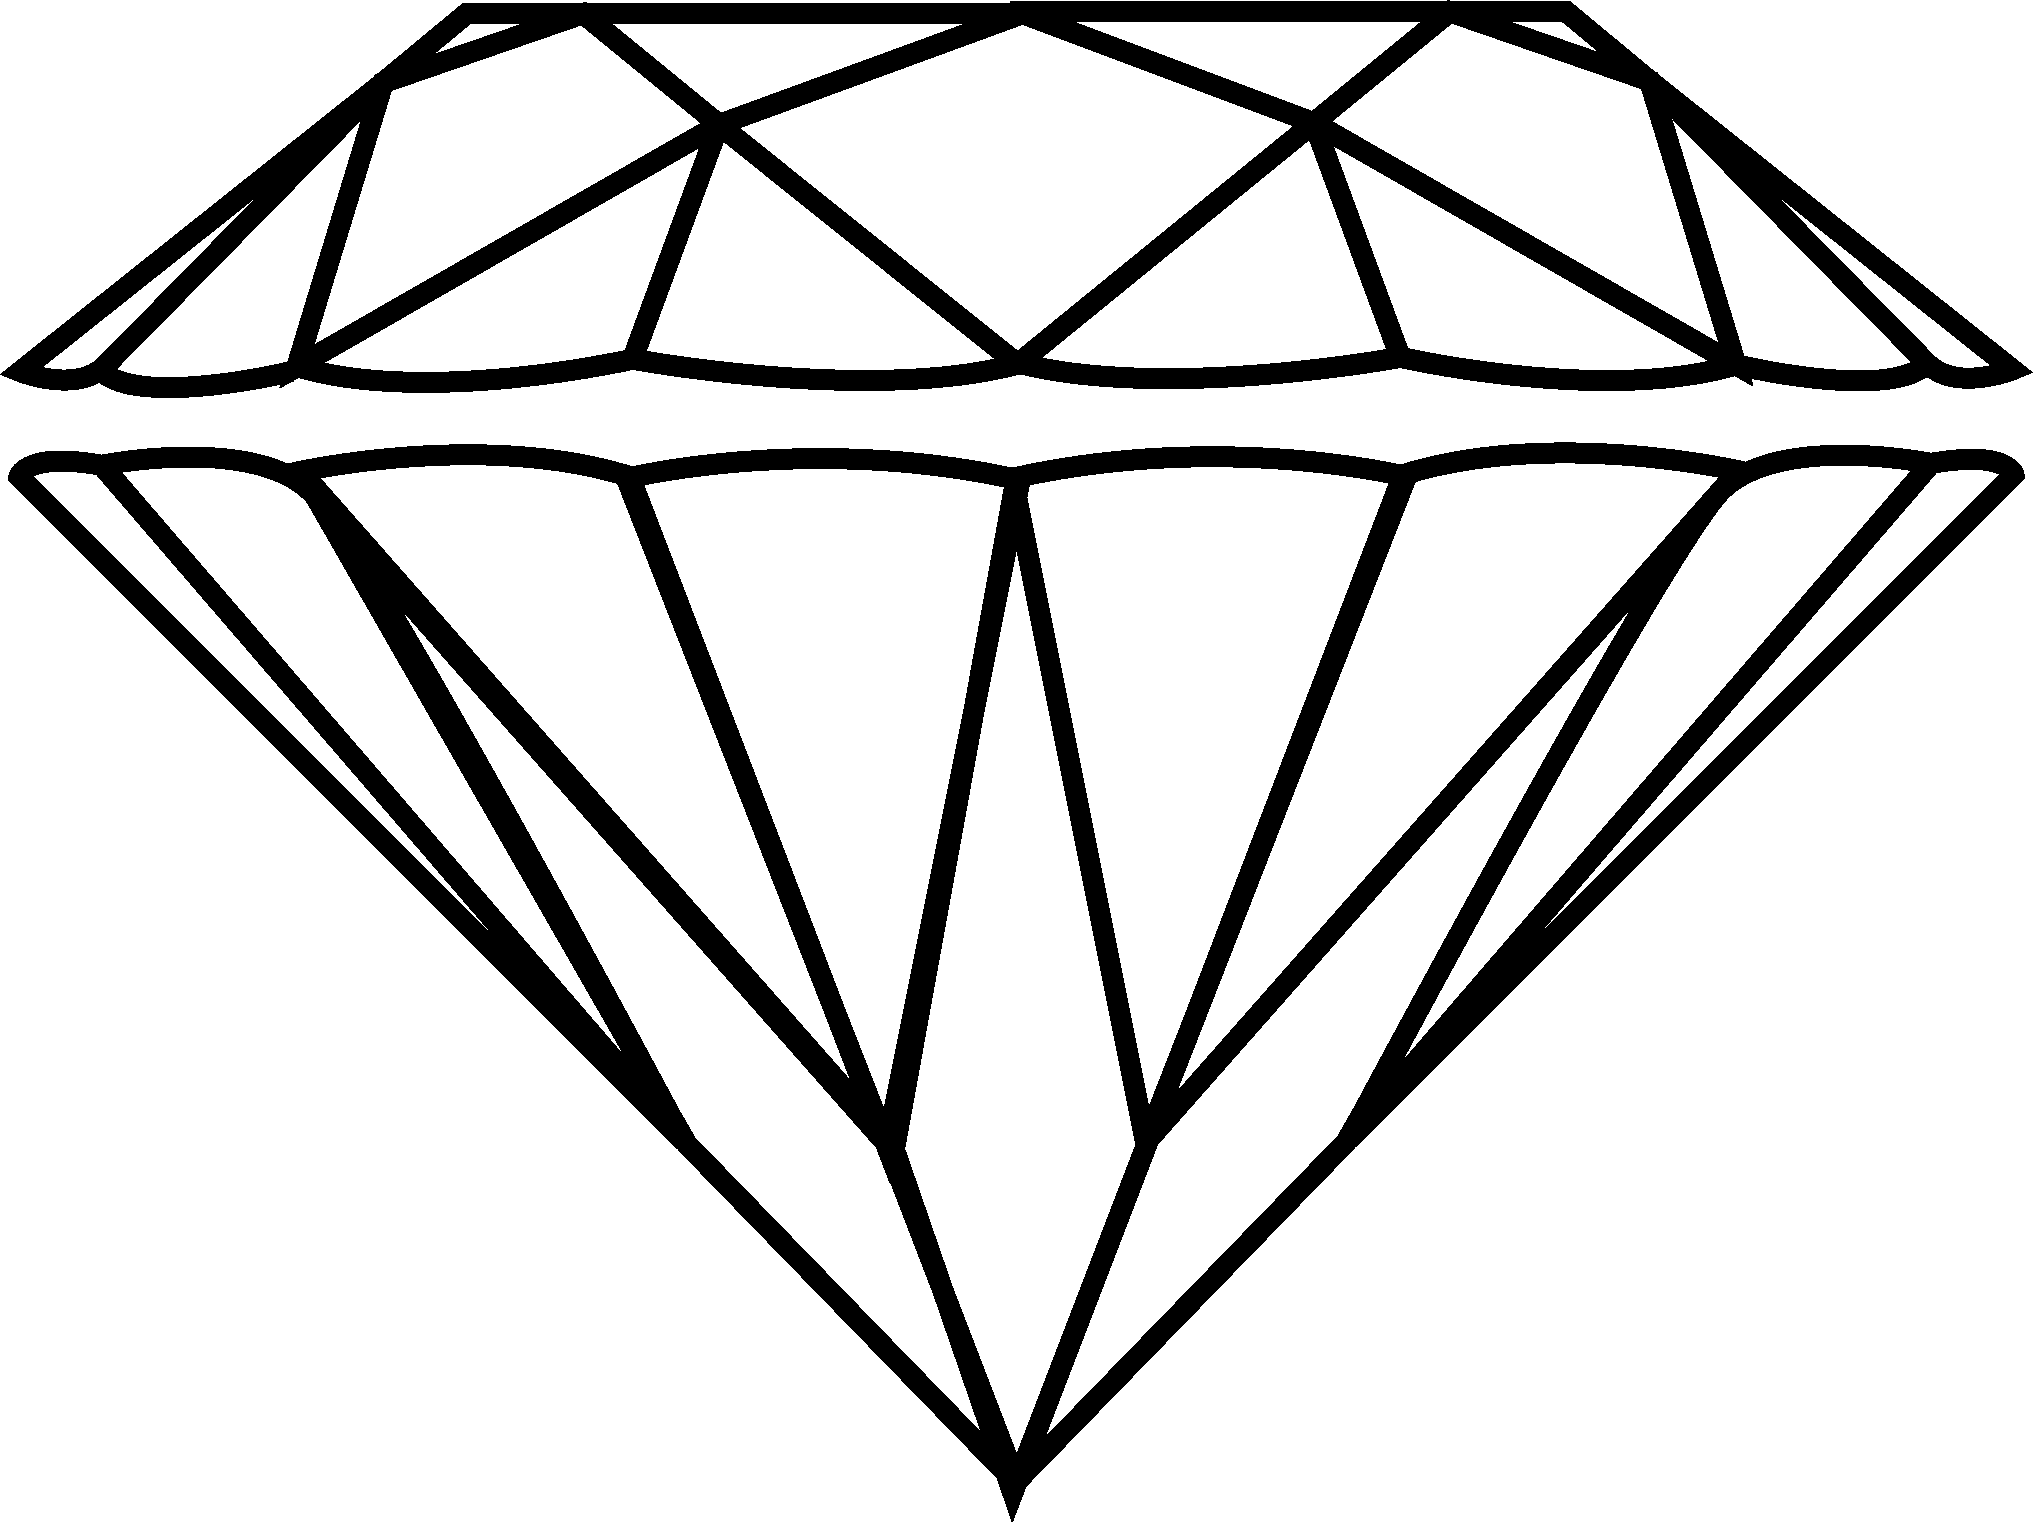 diamond clipart line drawing